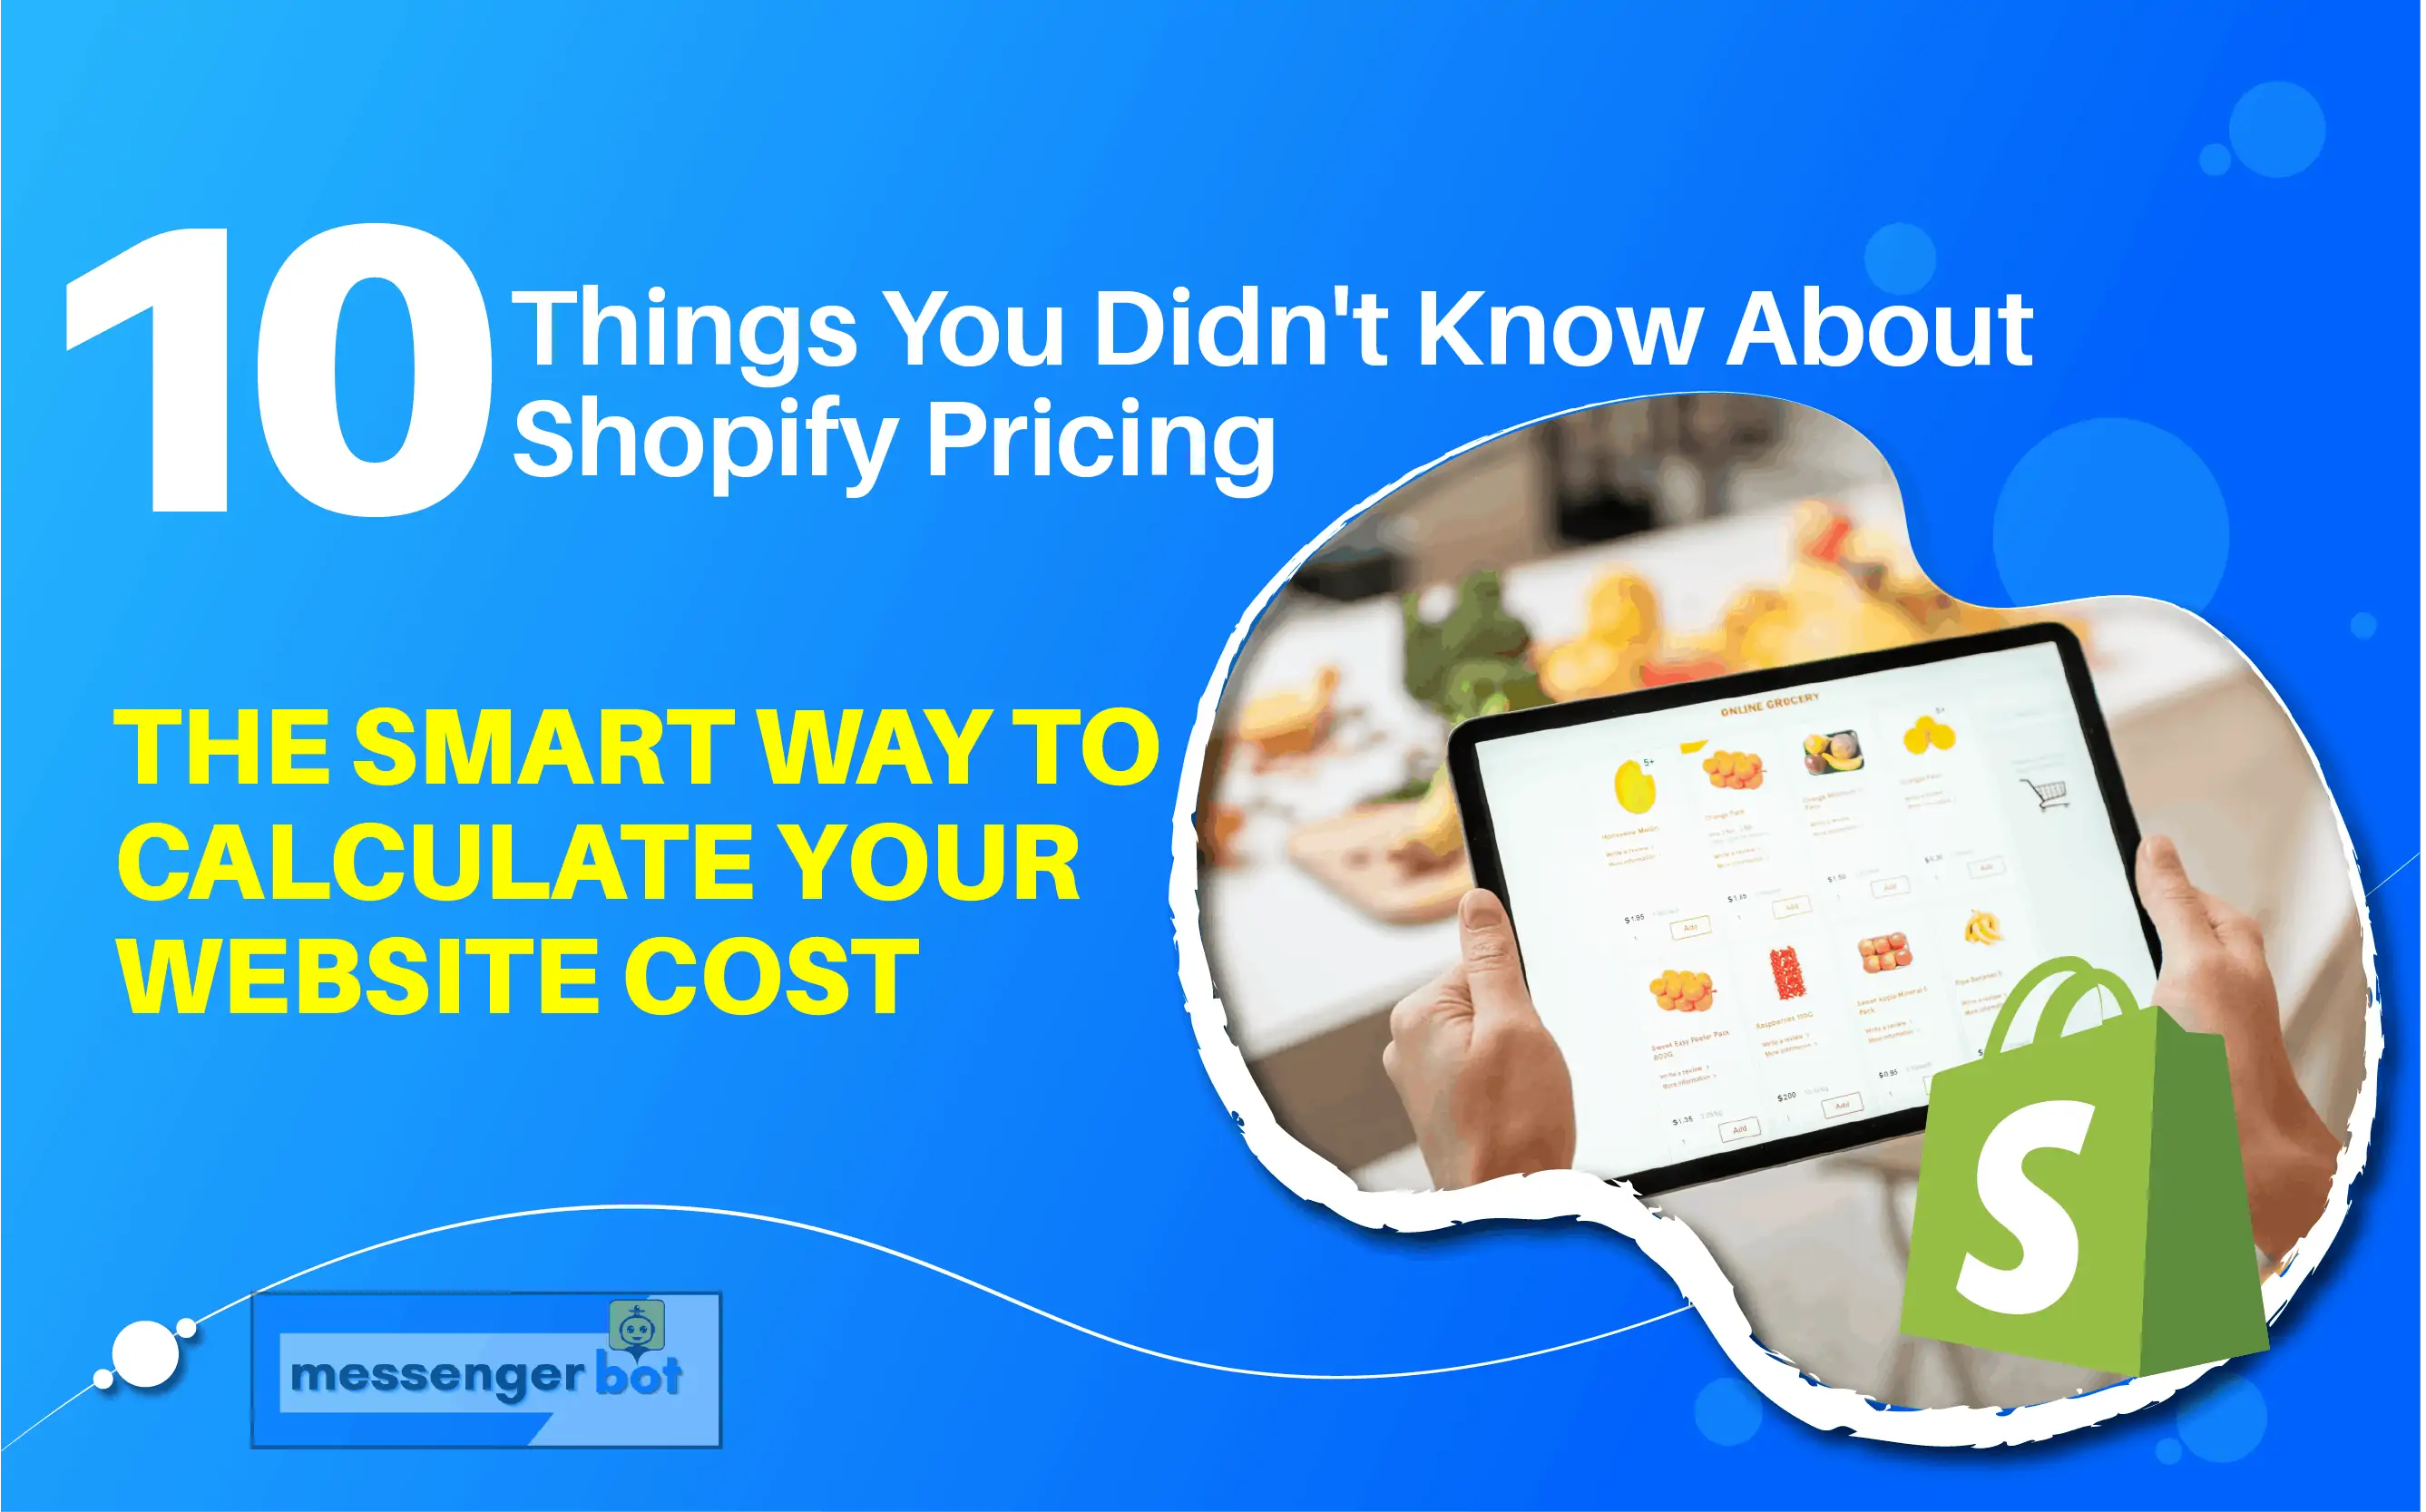 shopify pricing, transaction fees, shopify lite, shopify payments, basic shopify